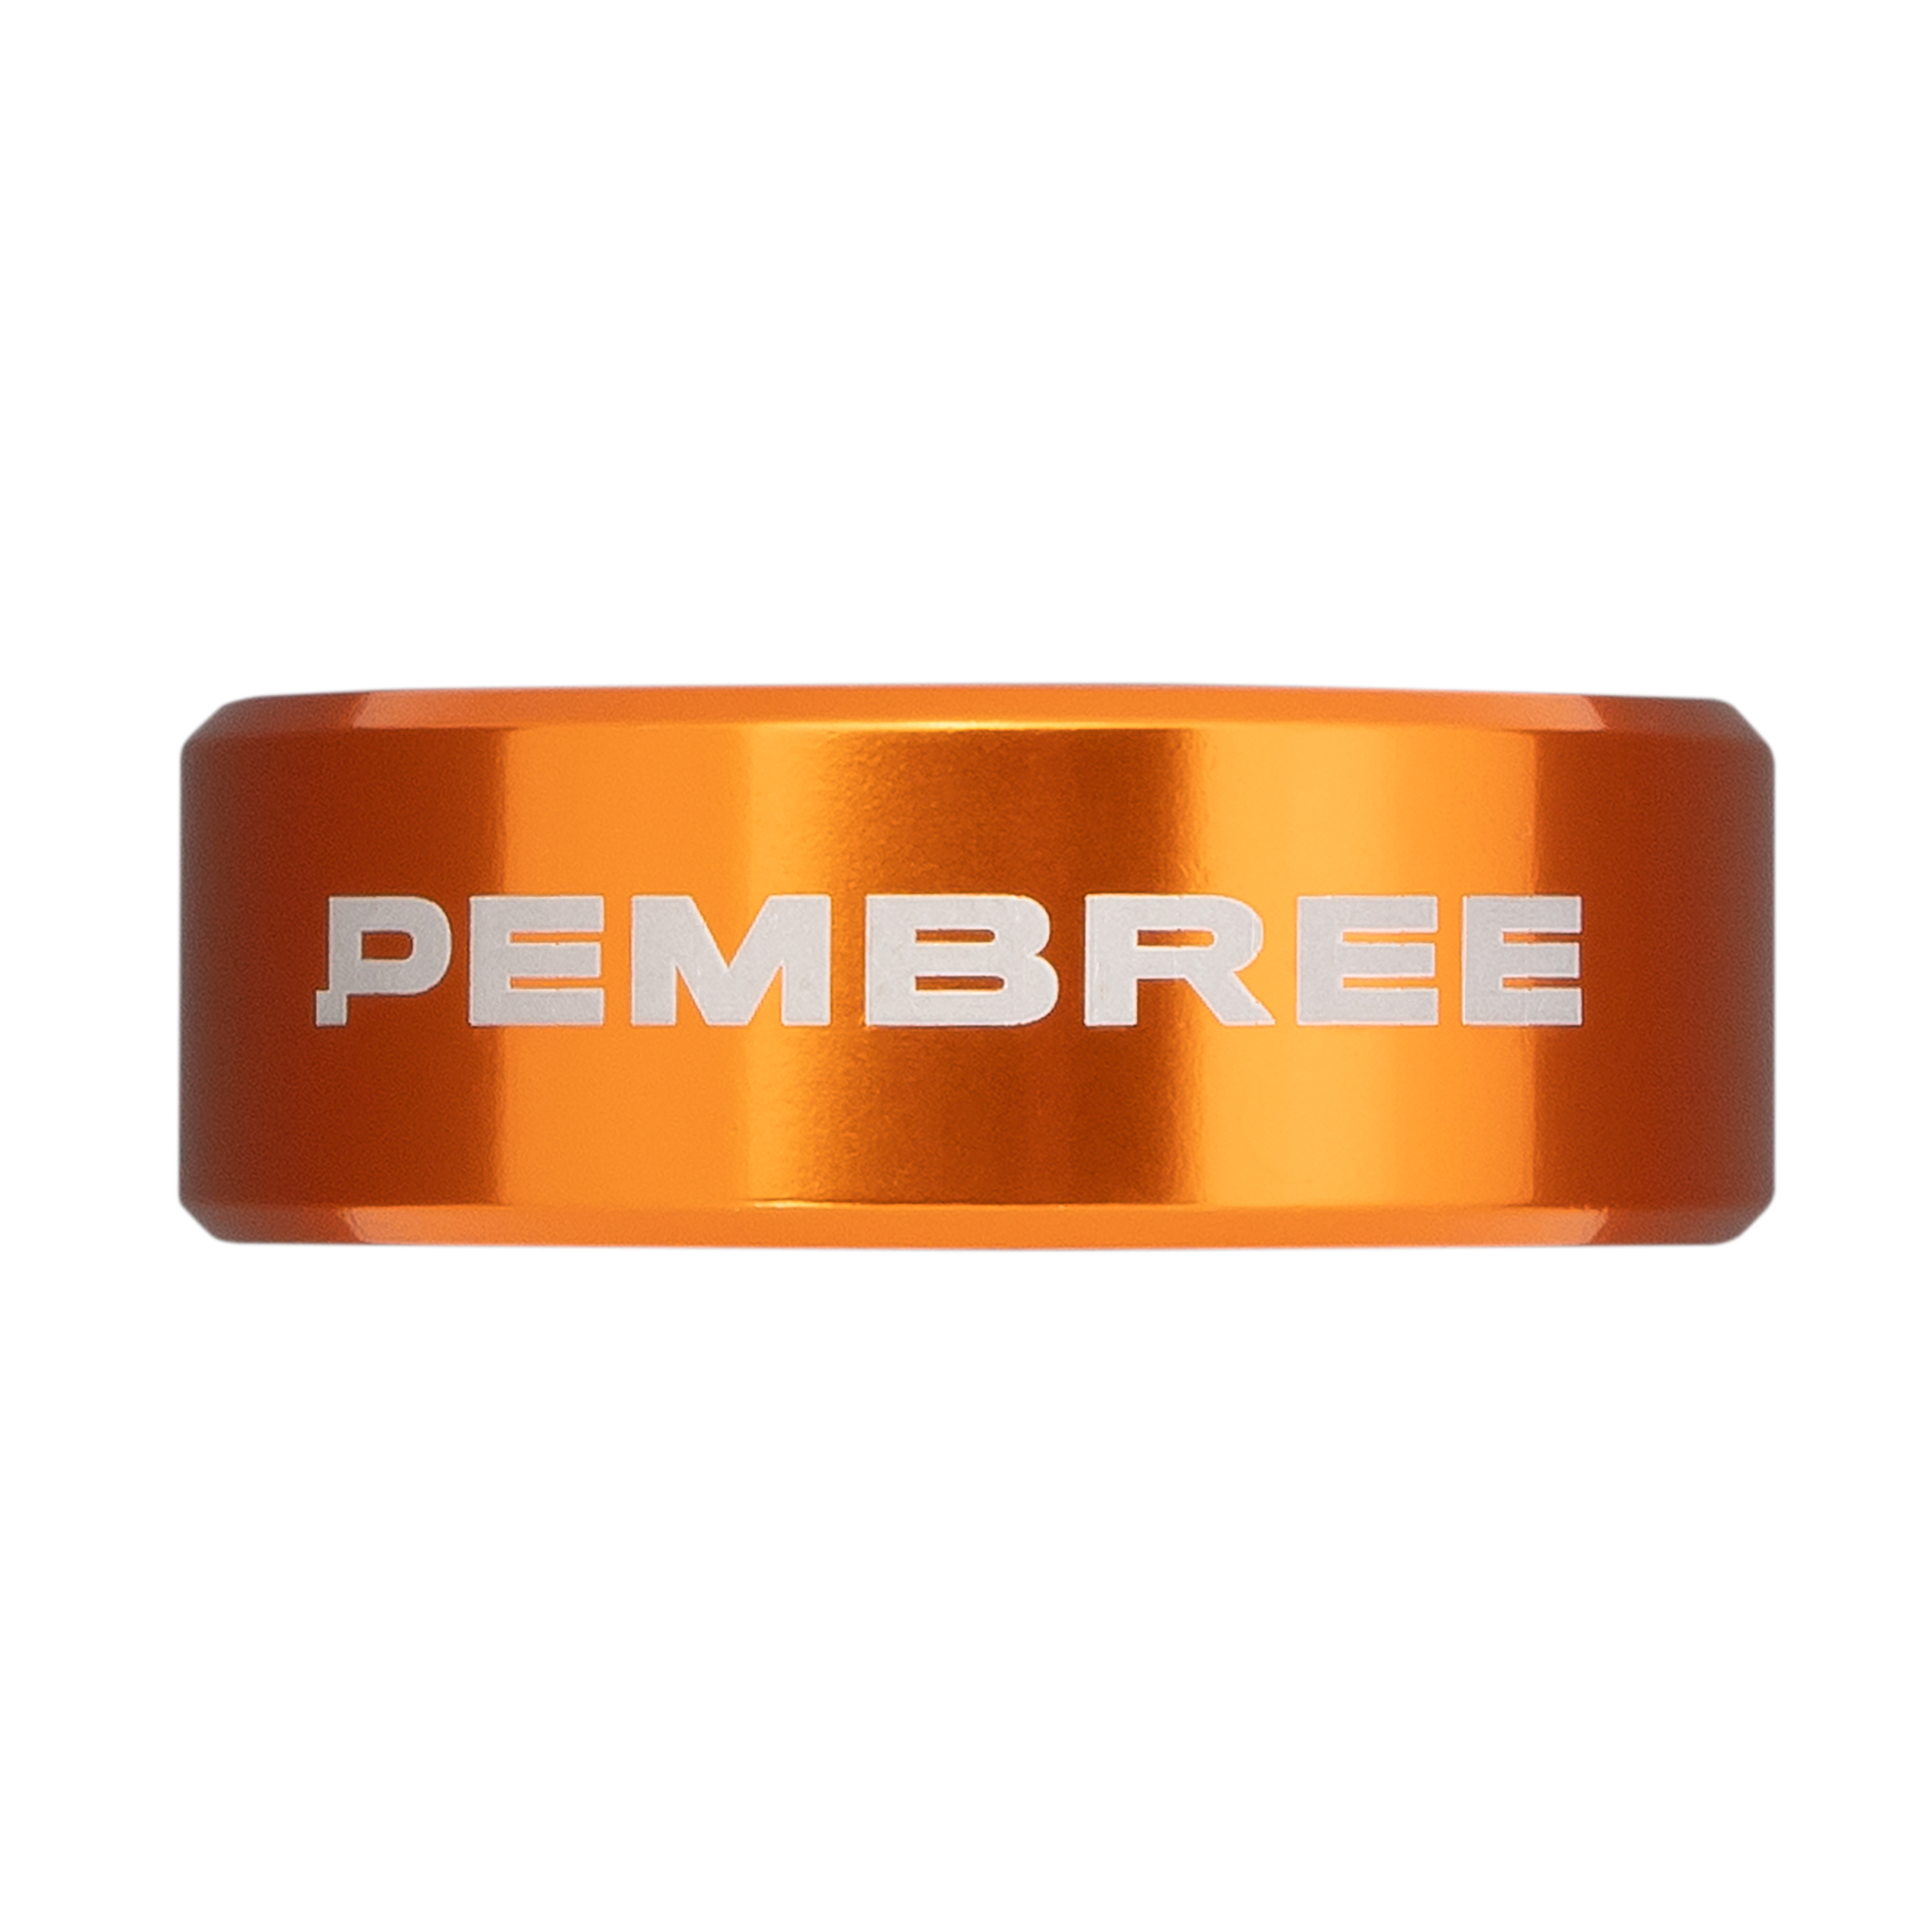 PEMBREE-DBN-Seat-Post-Clamp-Orange-Front.jpg